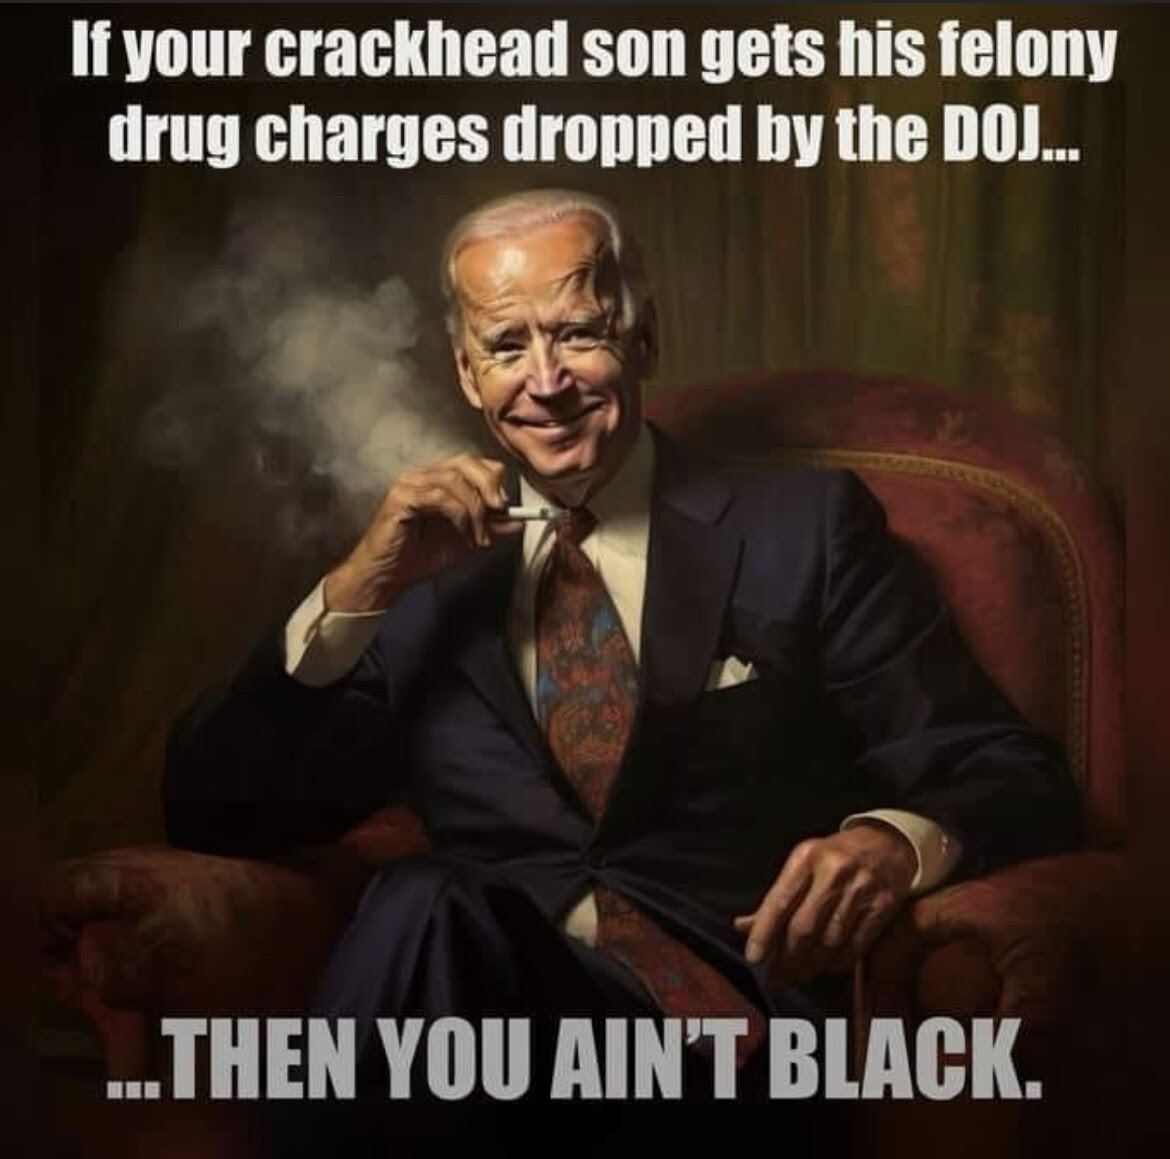 Meme mocking Biden for his son's cocaine abuse.